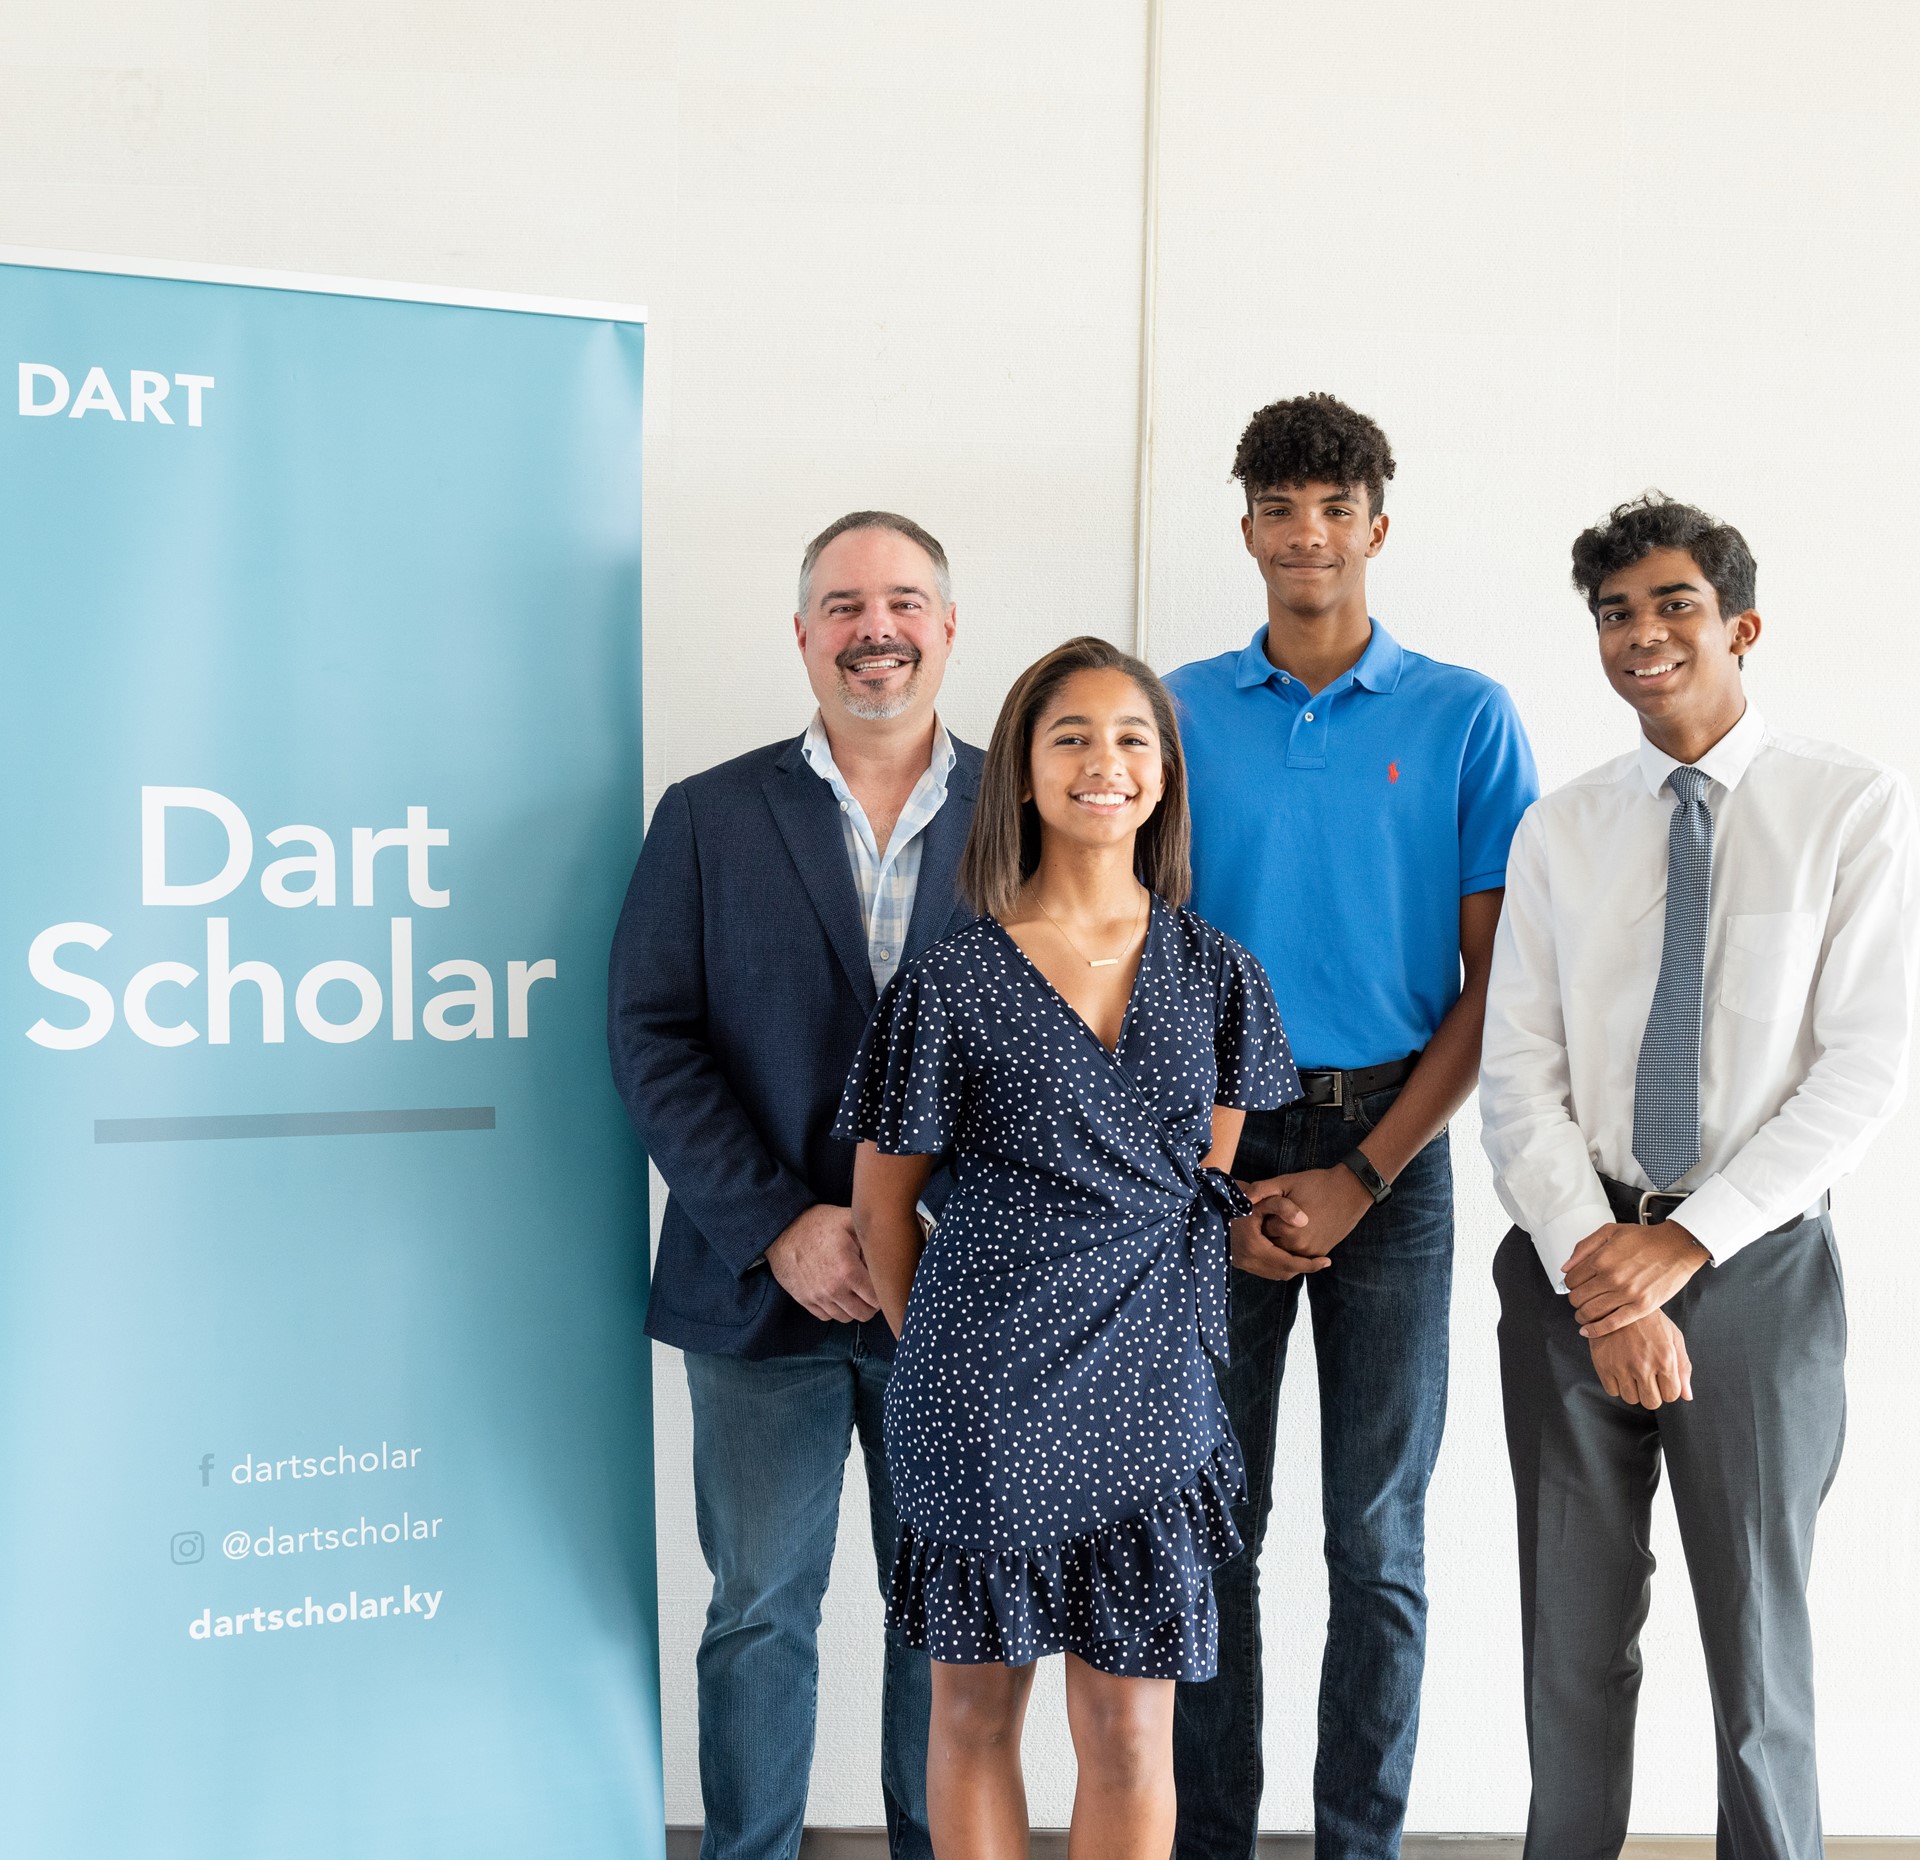 Dart Scholar turns 10